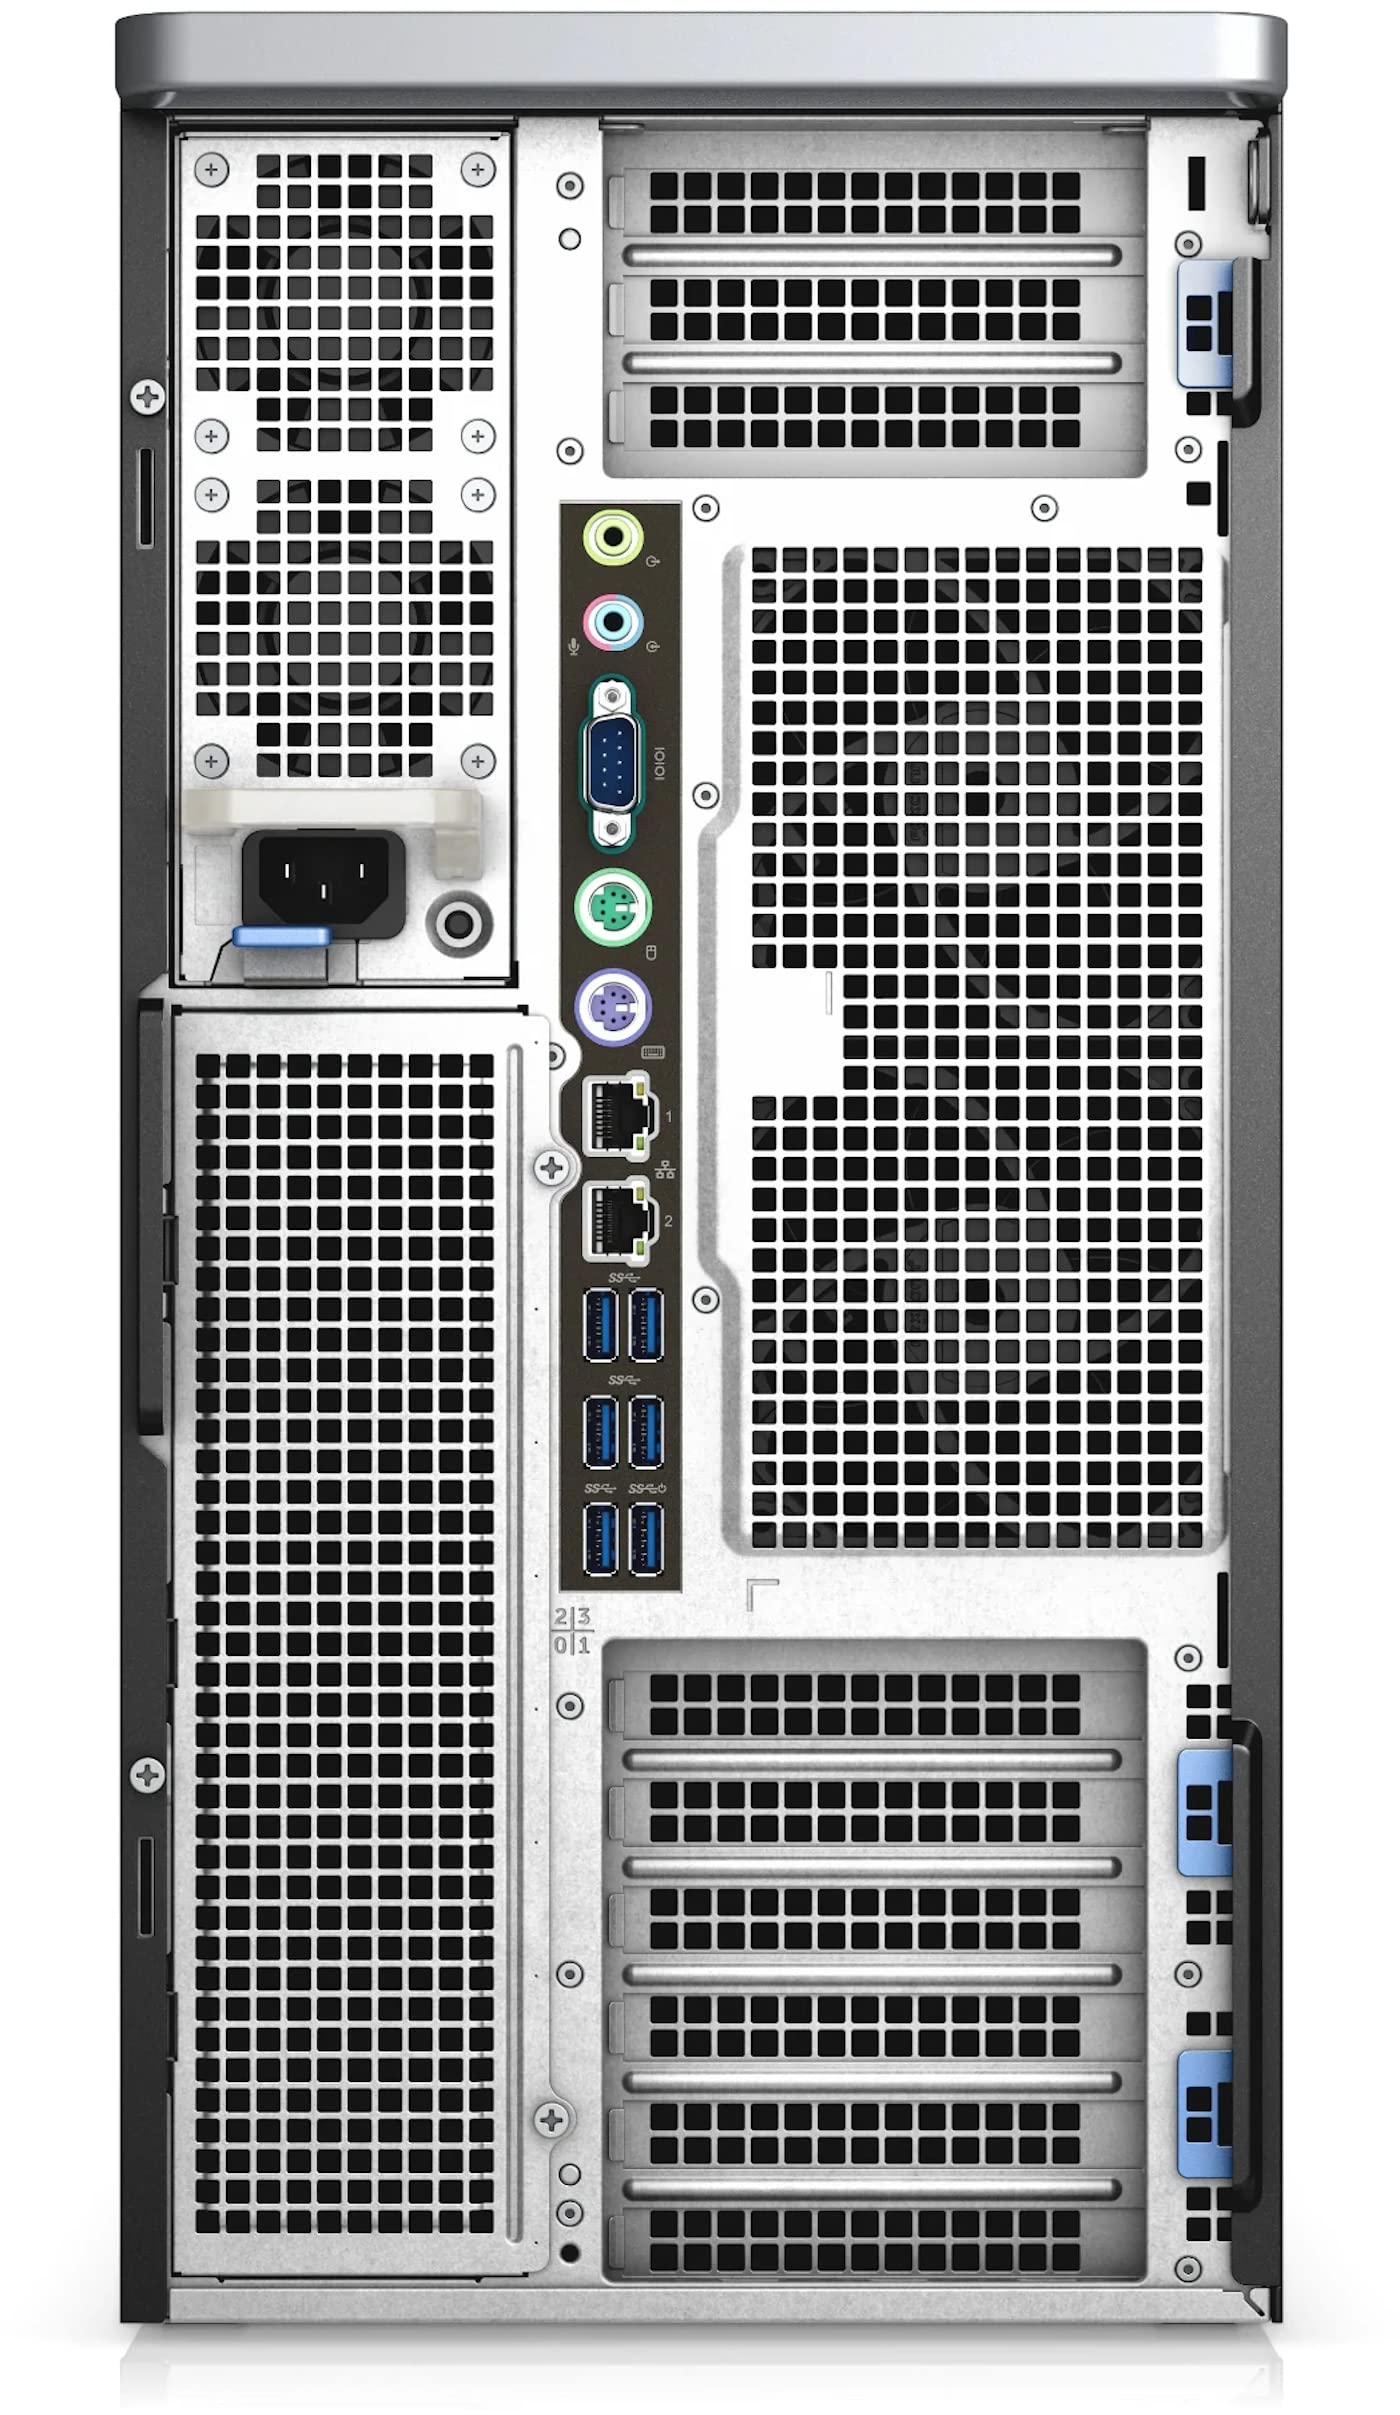 PCSP High End Precision 7920 Tower Workstation, 2X Intel Xeon Platinum 8160 up to 3.7GHz (48-Cores/96 Threads), 1TB M.2 NVMe + 4TB HDD, Quadro P2000 5GB, Windows 11 Pro 64-bit (Renewed) (1.5TB DDR4)